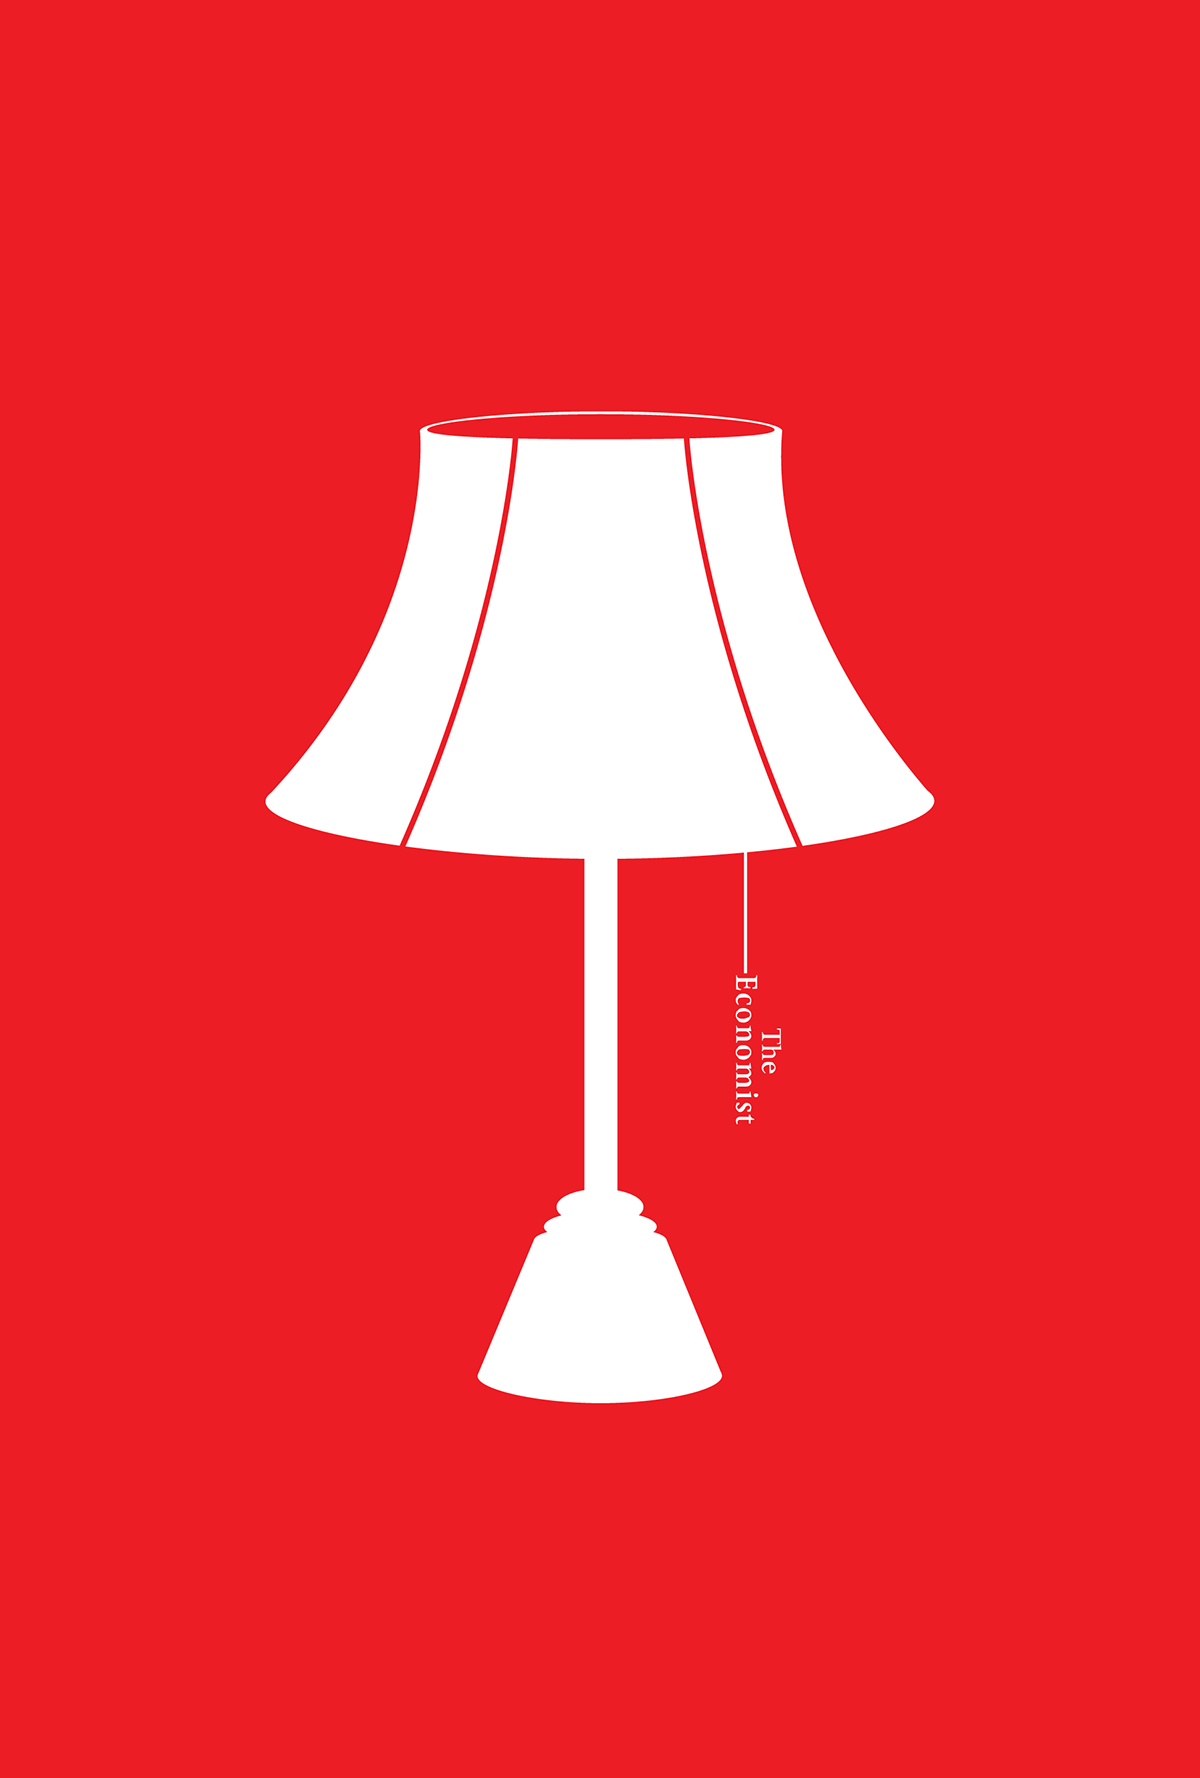 Lamp The Economist newspaper magazine minimal print poster red Silhouette